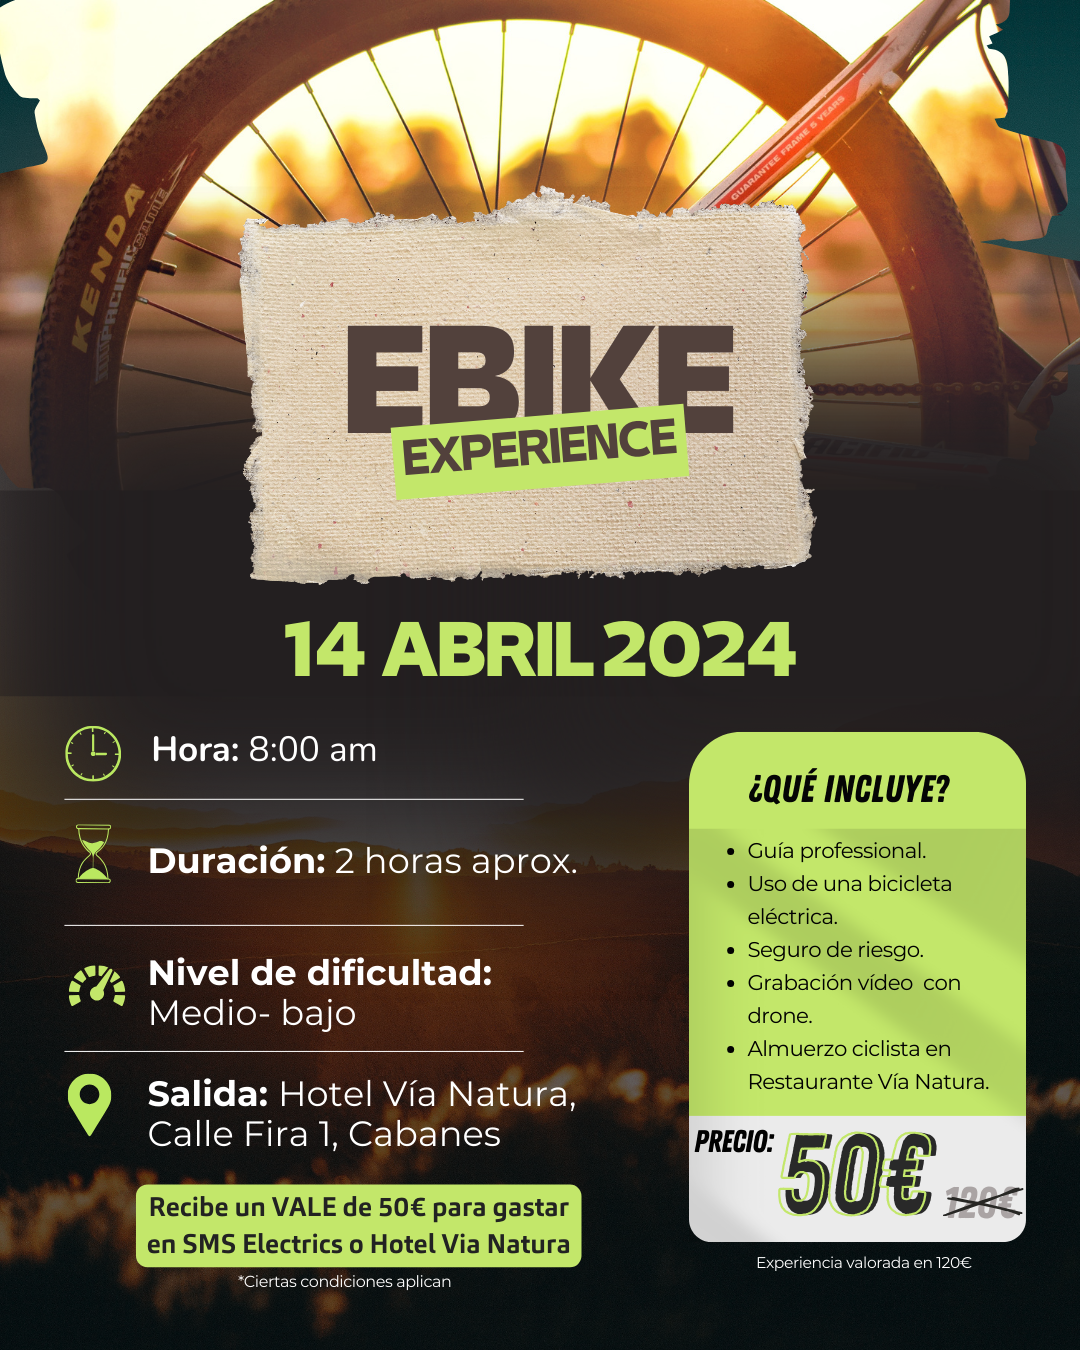 Ebike experience Cabanes